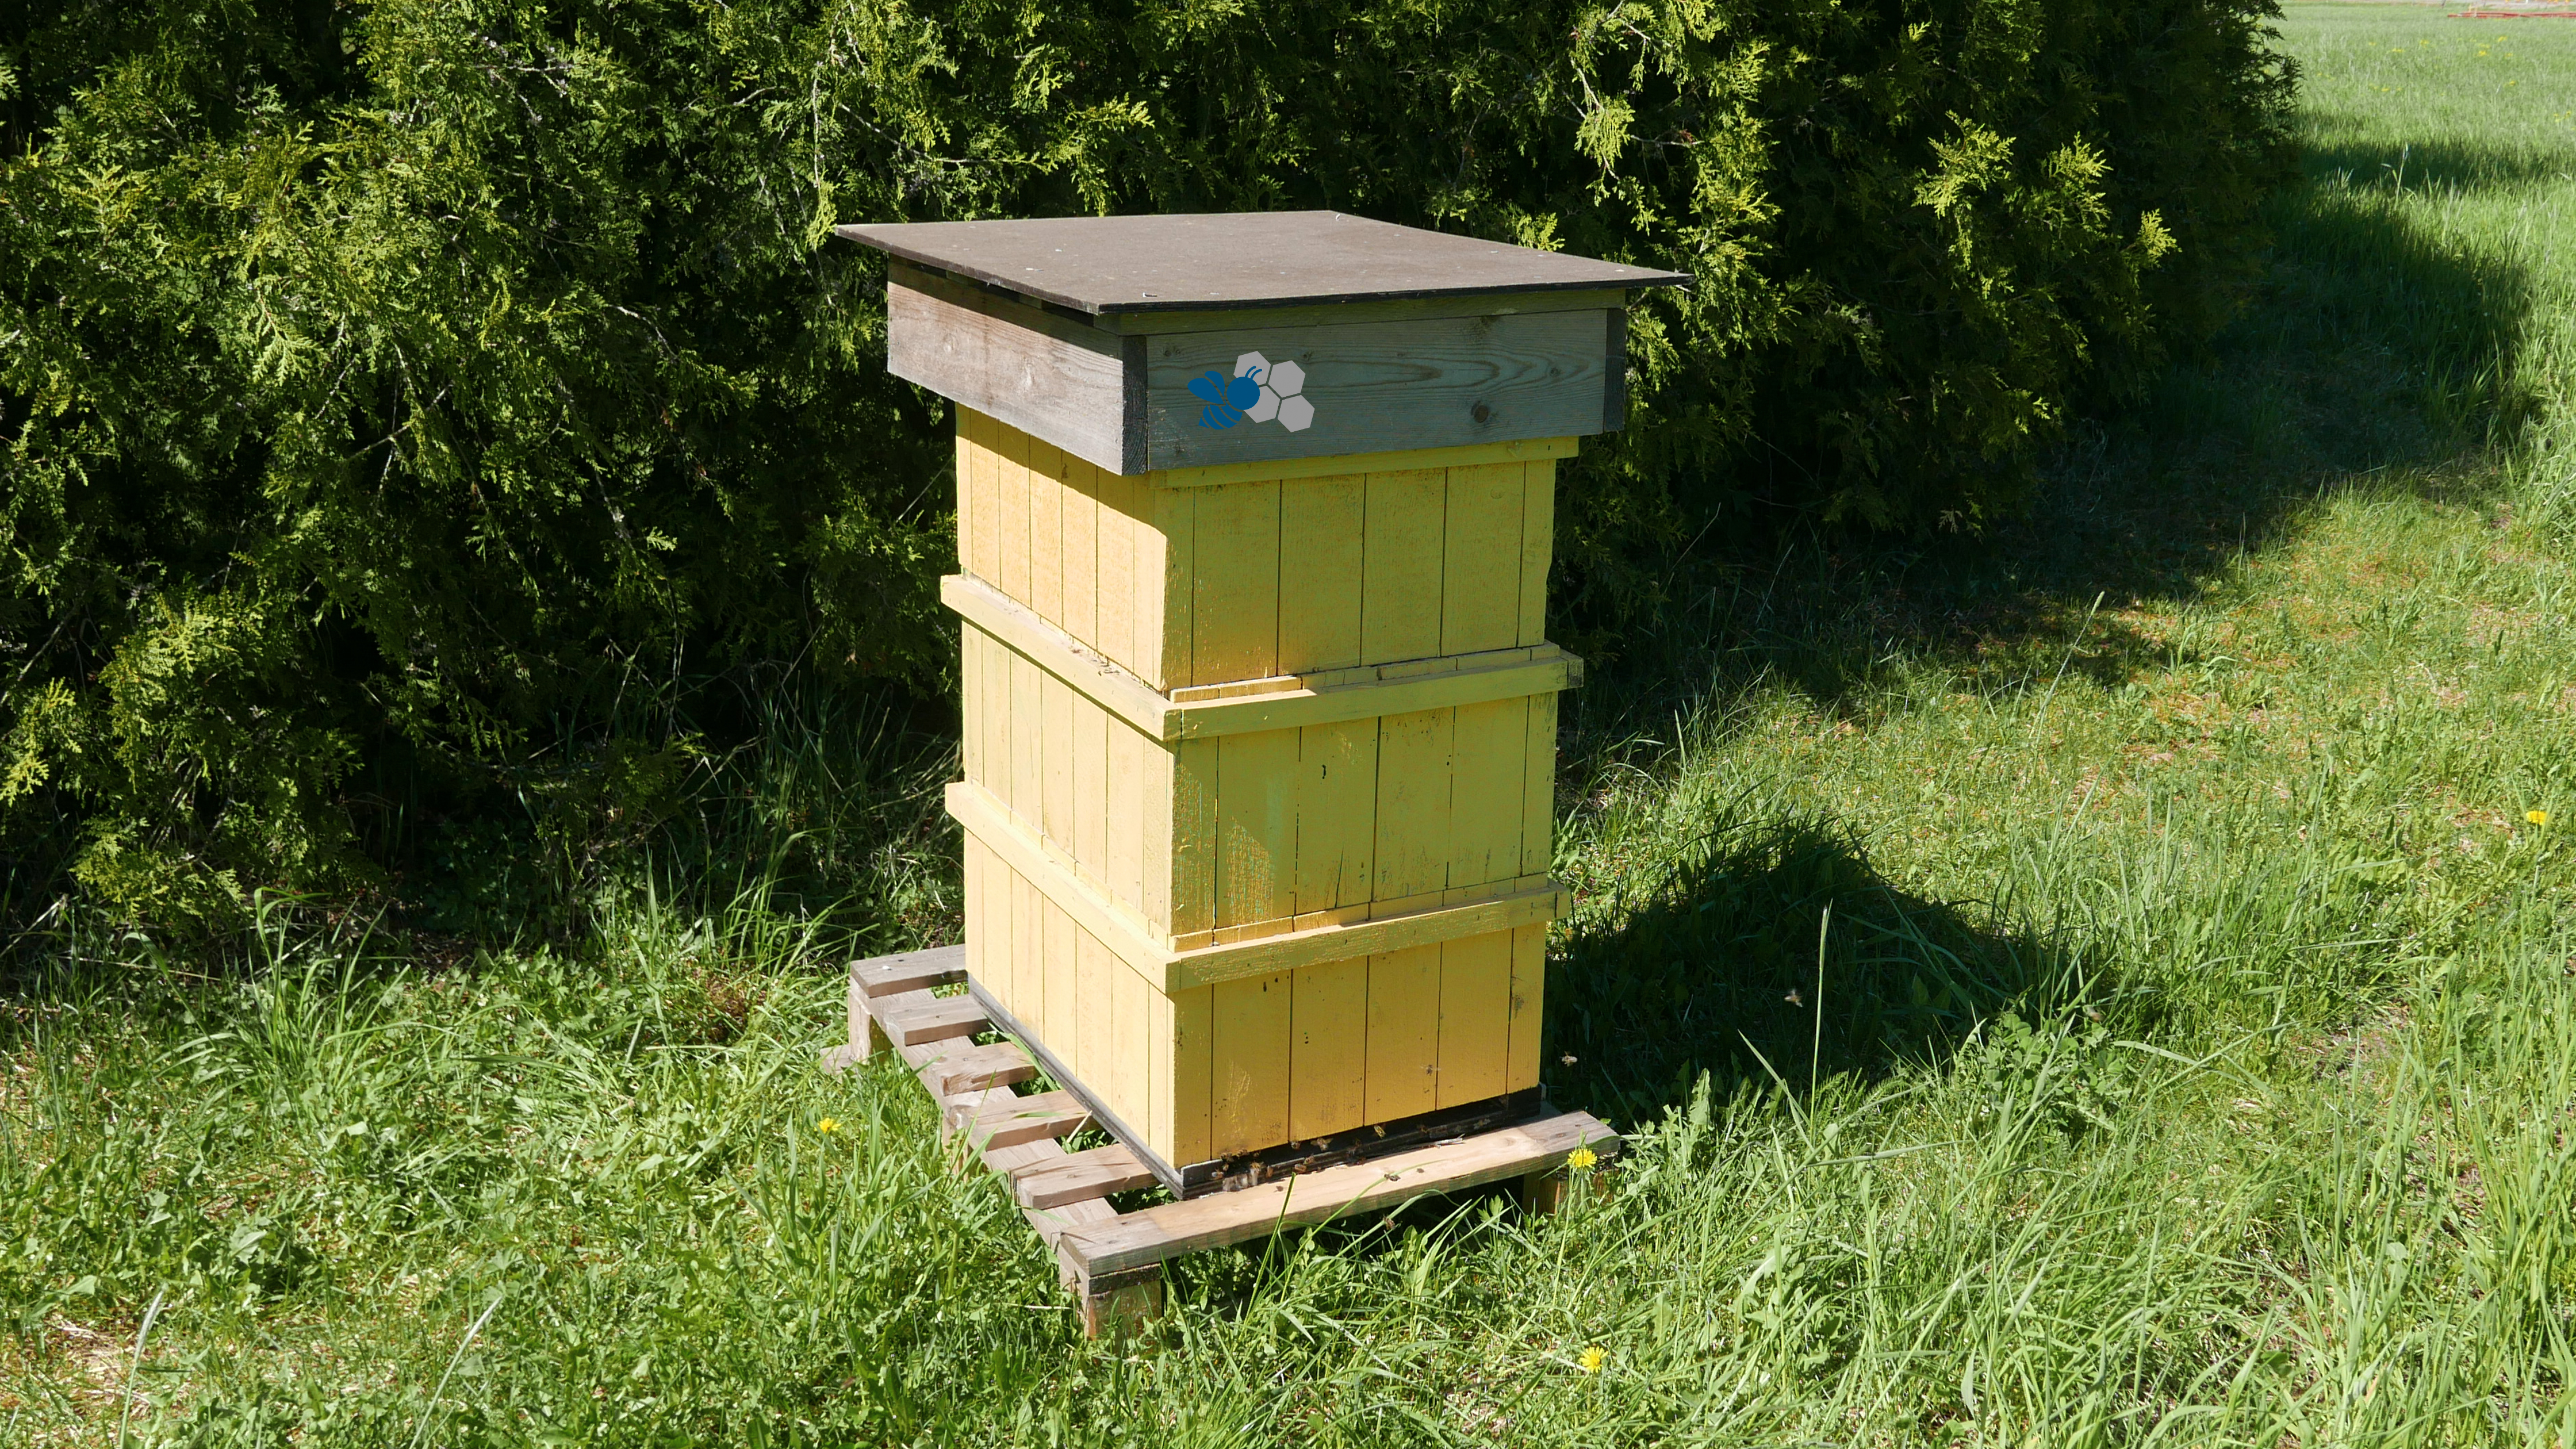 Anticimexin mehiläispesä